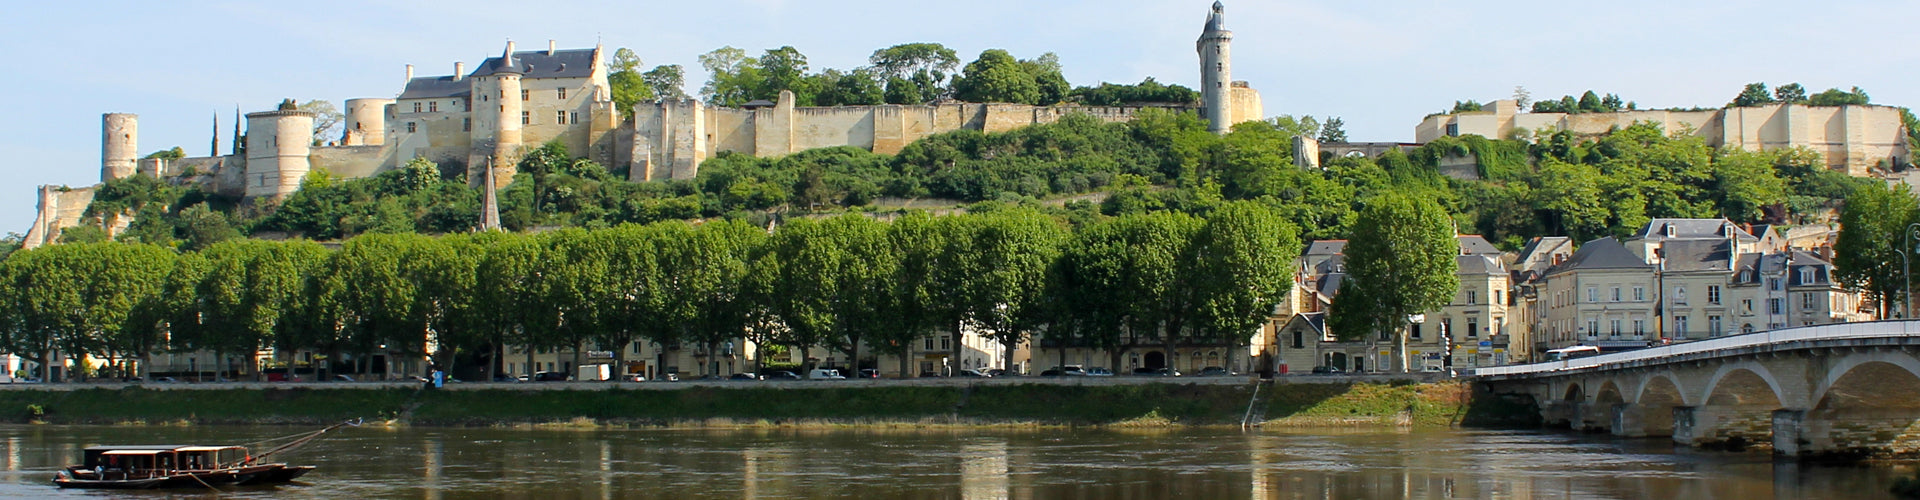 Château de Chinon in the Touraine Wine Region of the Loire Valley